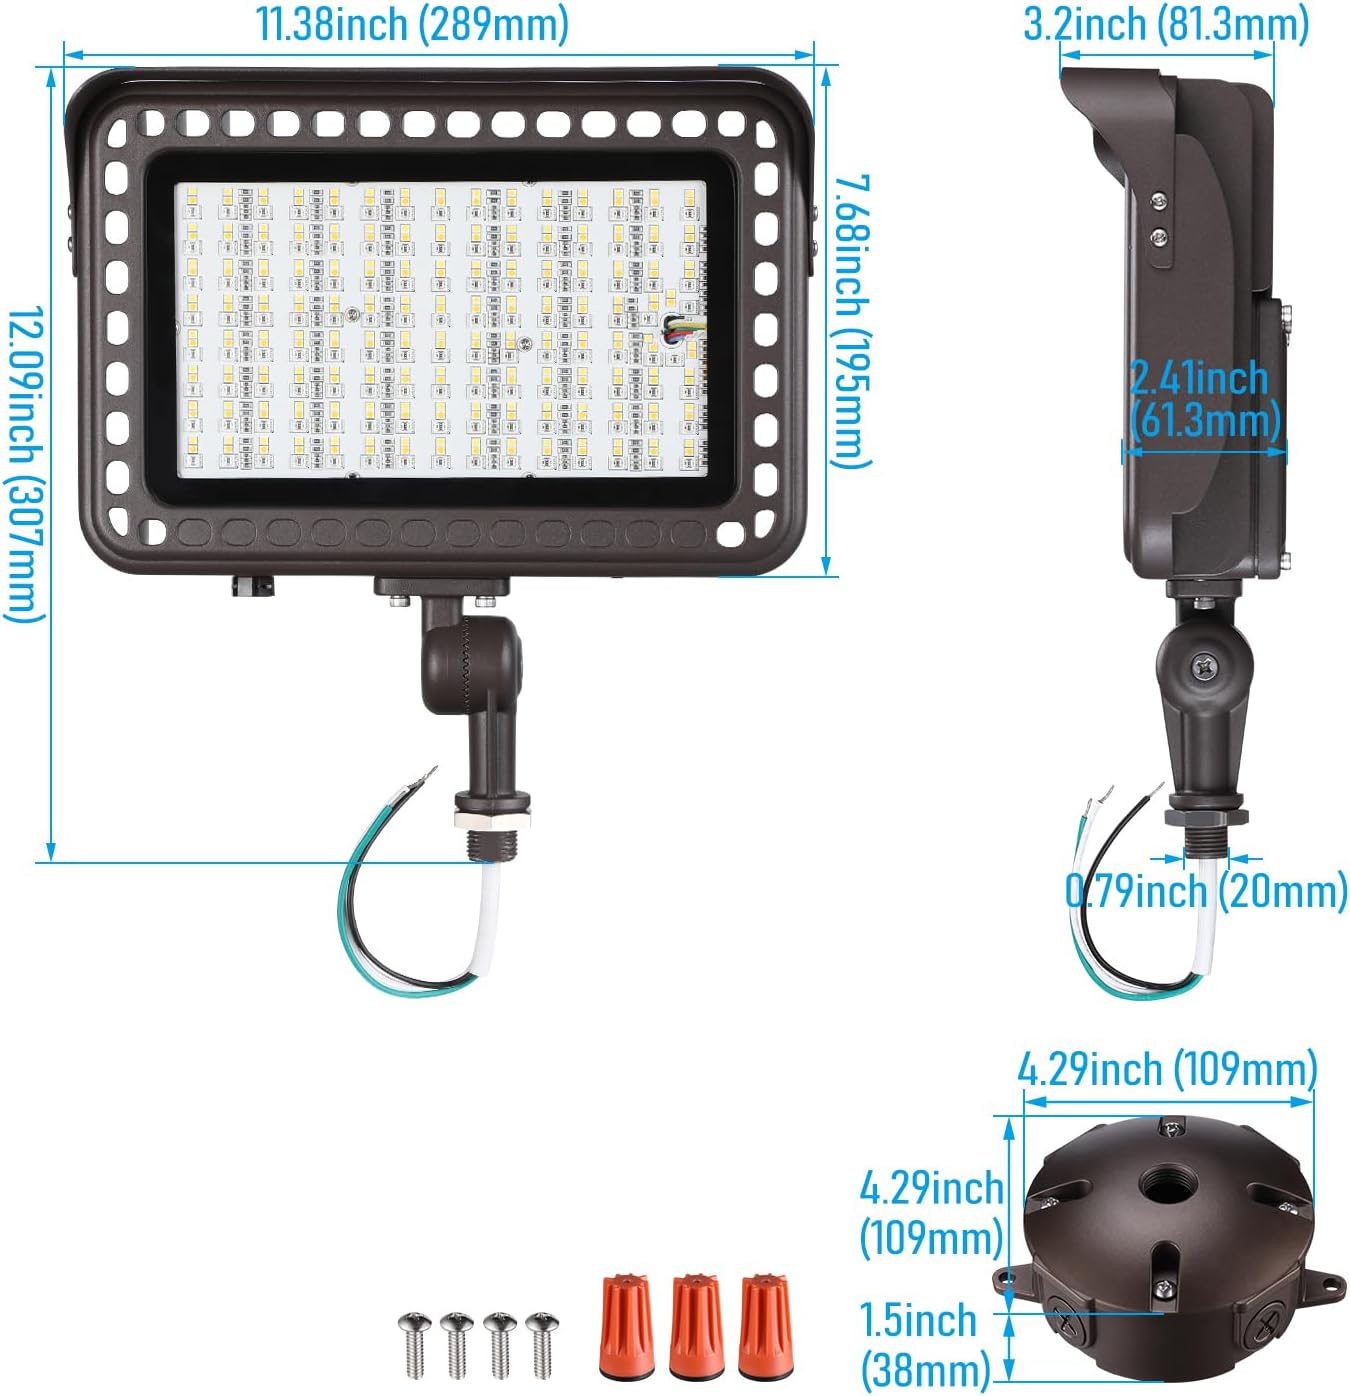 LeonLite® Potente Smart LED Flood Light - RGB